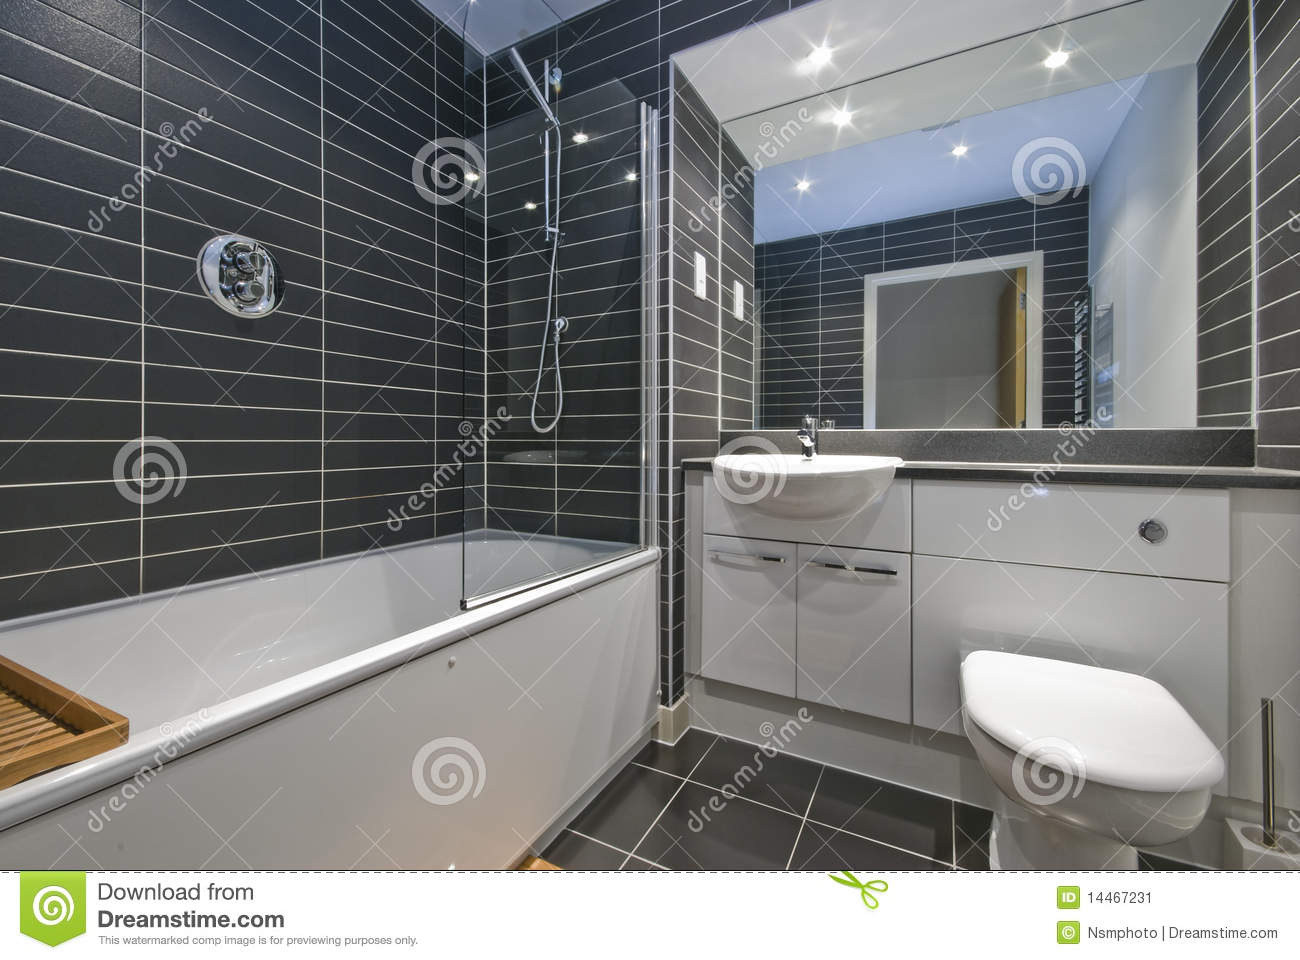 contemporary-bathroom-black-tiled-walls-large-bath-tub-144436